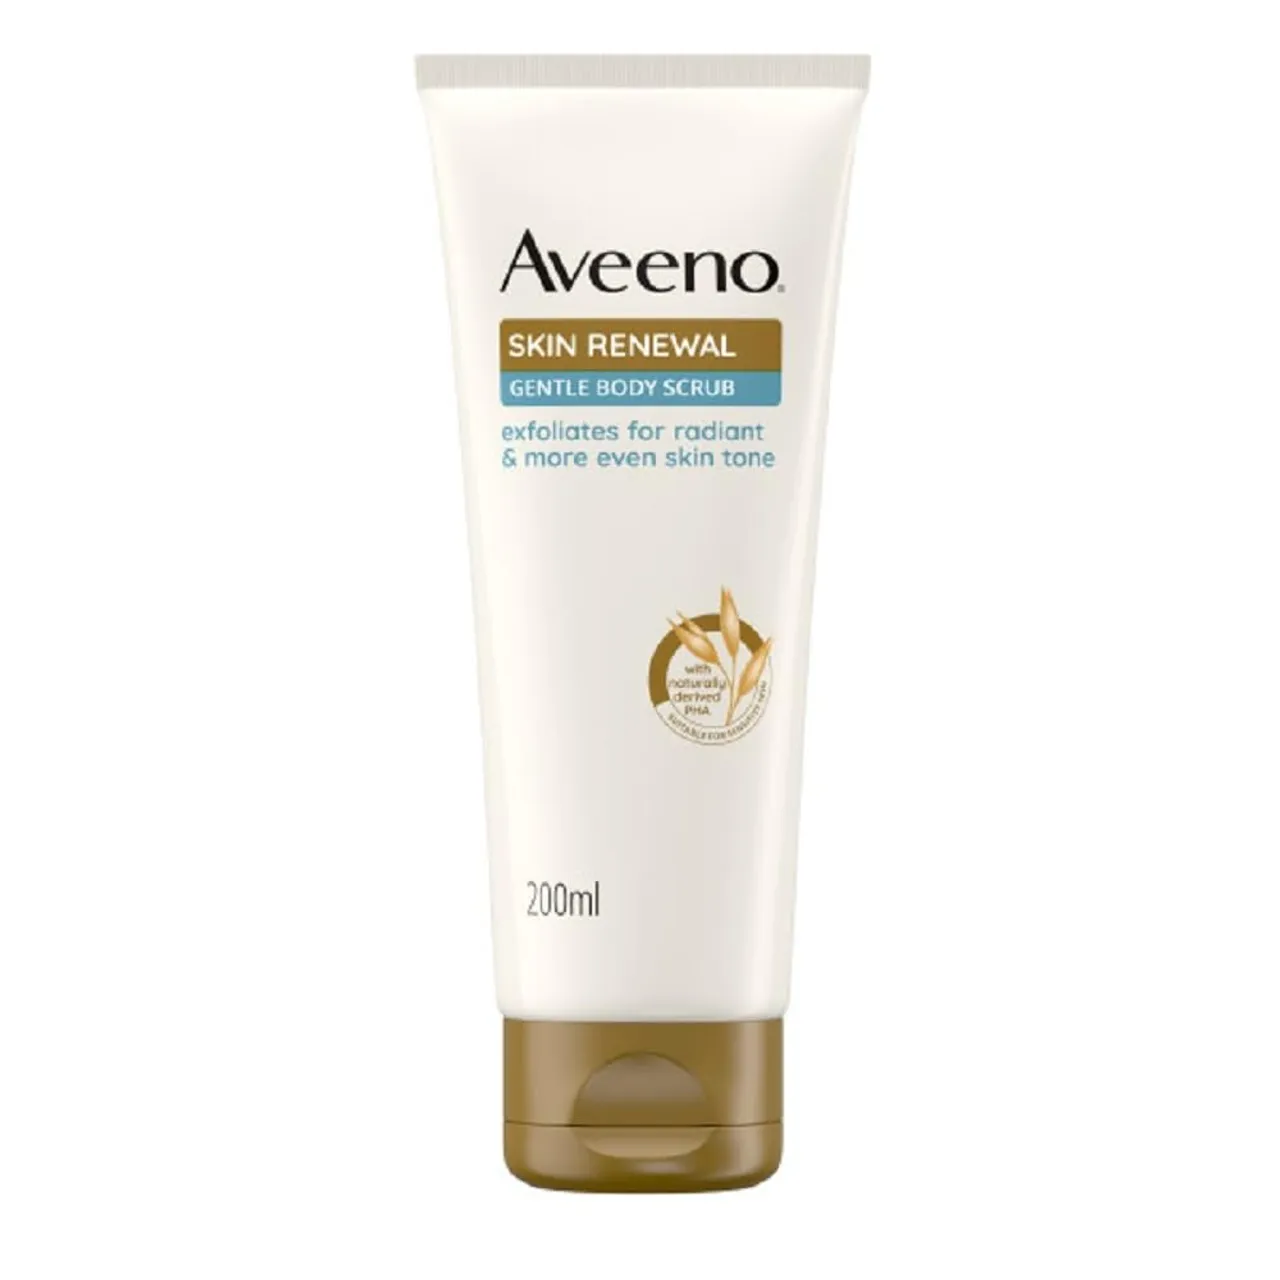 Aveeno Skin Renewal Gentle Body Scrub